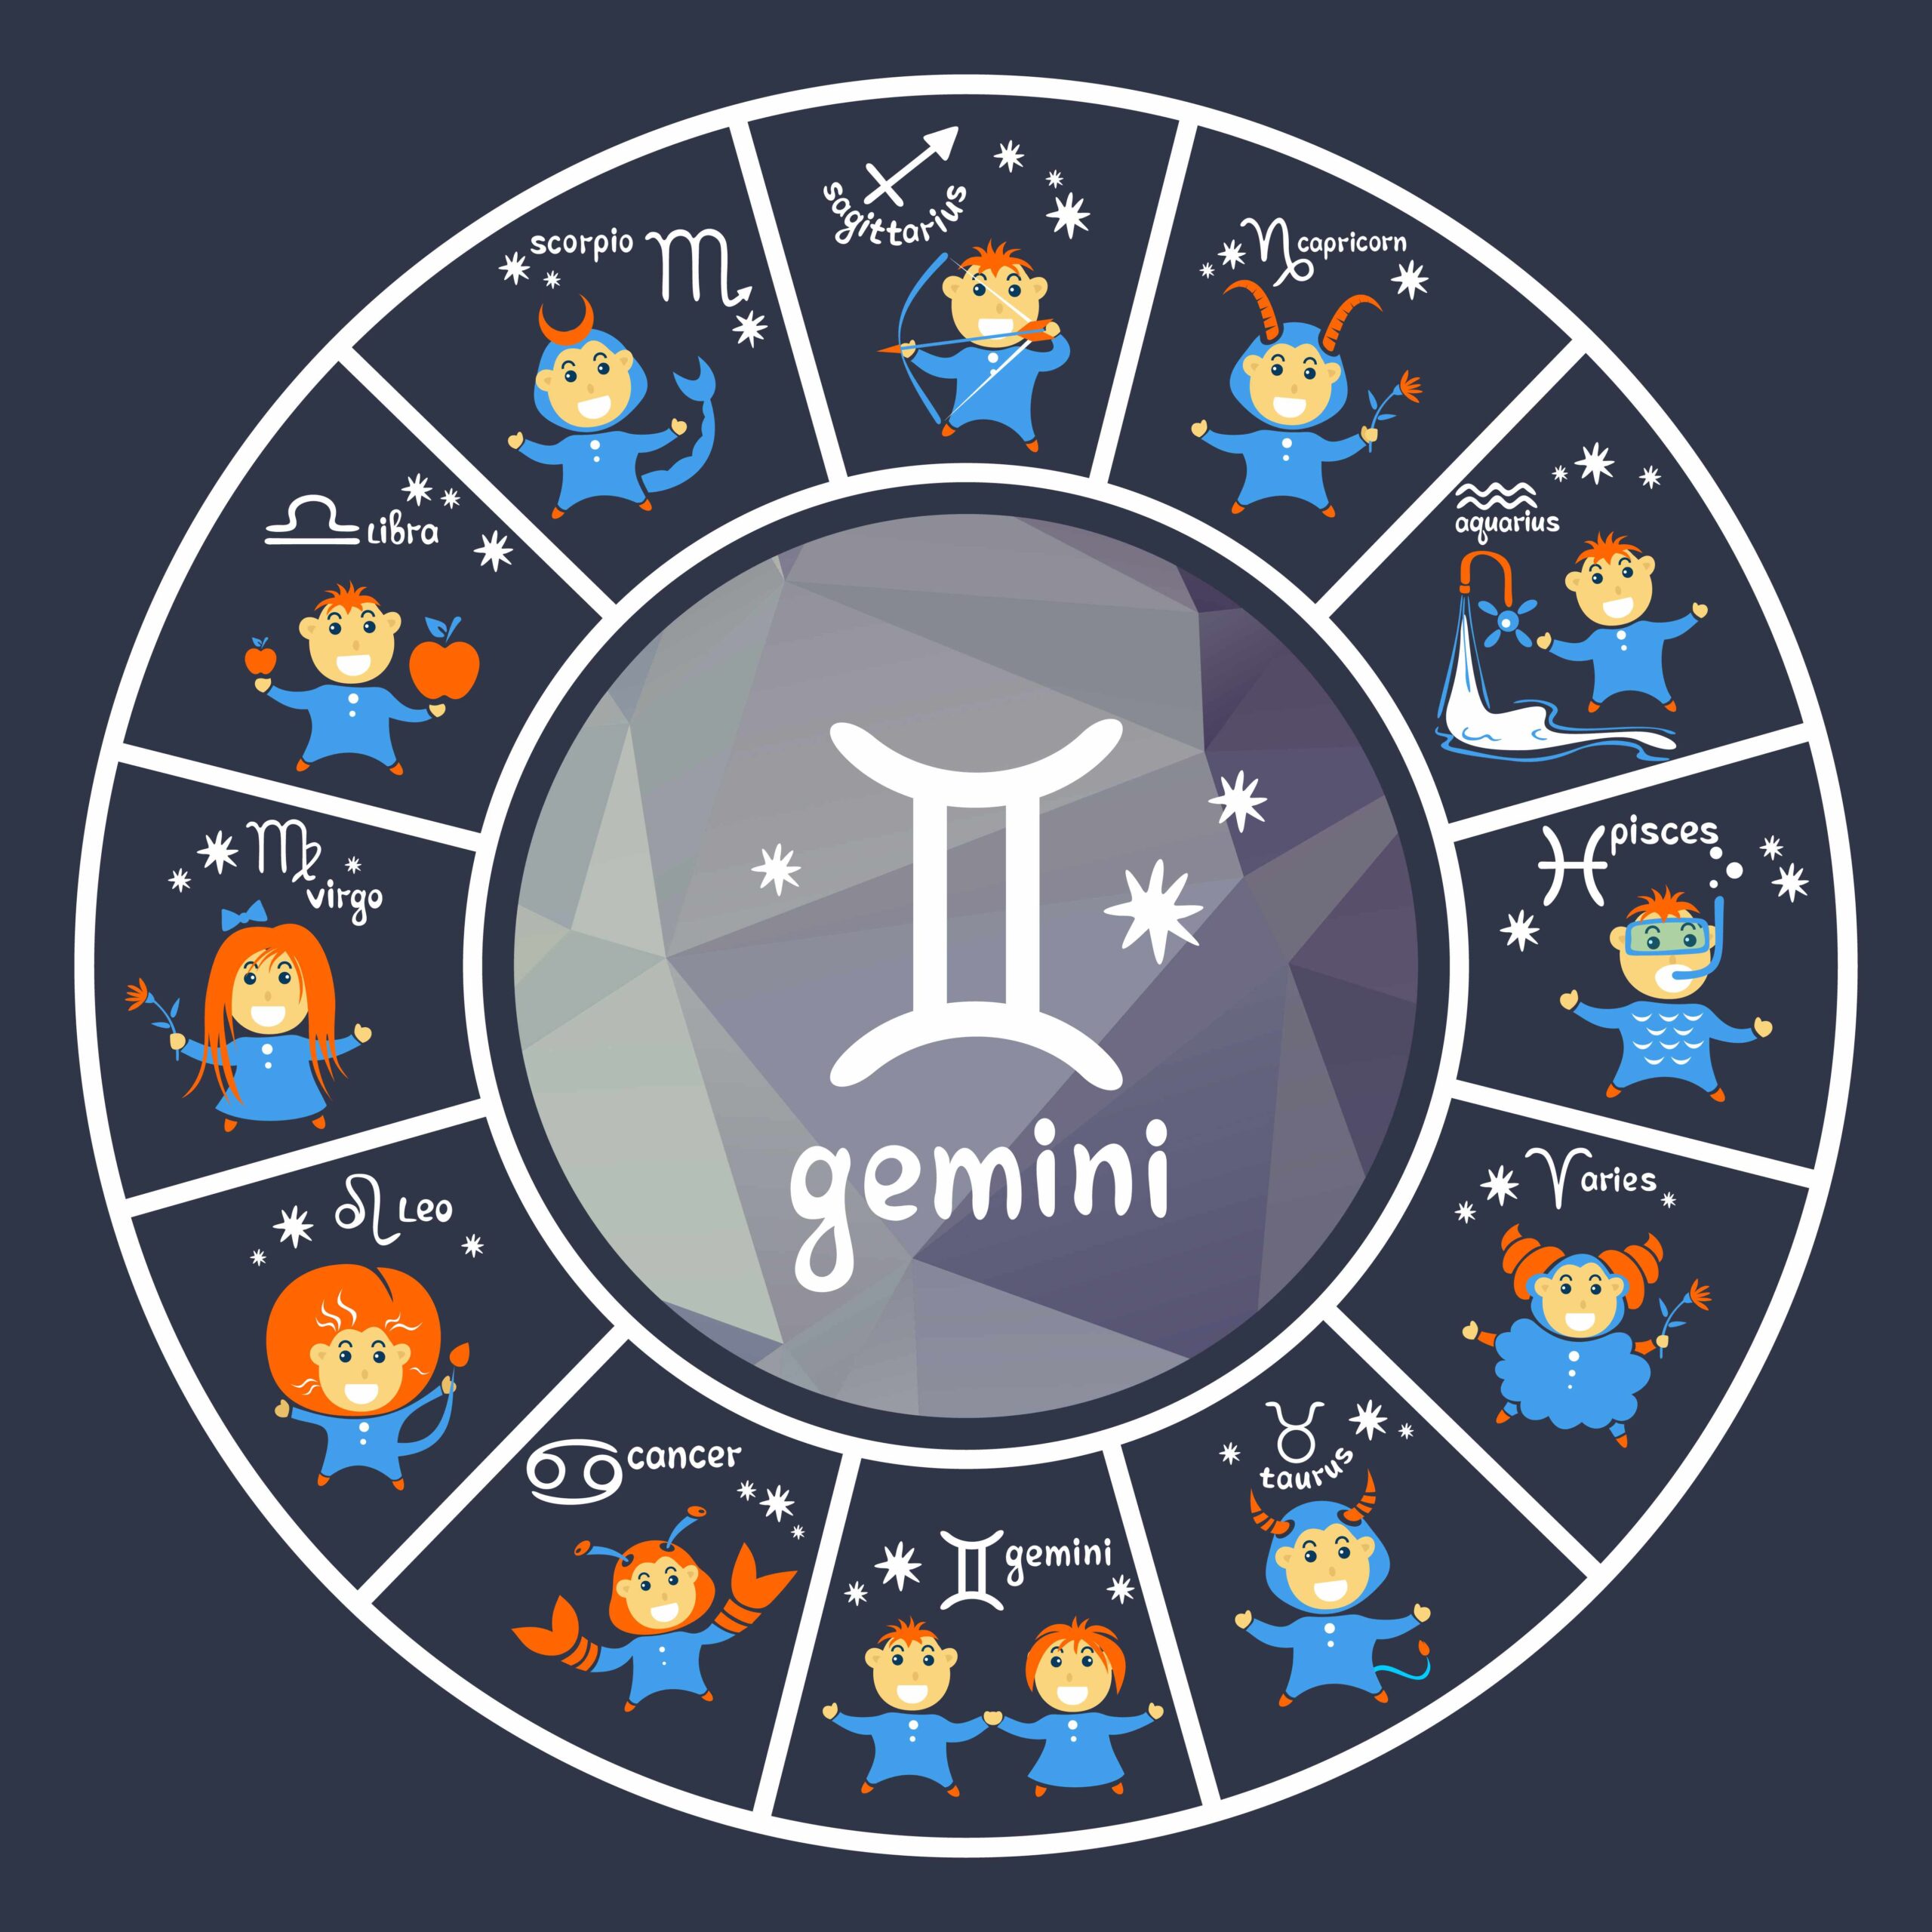 Gemini တွေ ဘယ်လိုချစ်ကြလဲ။